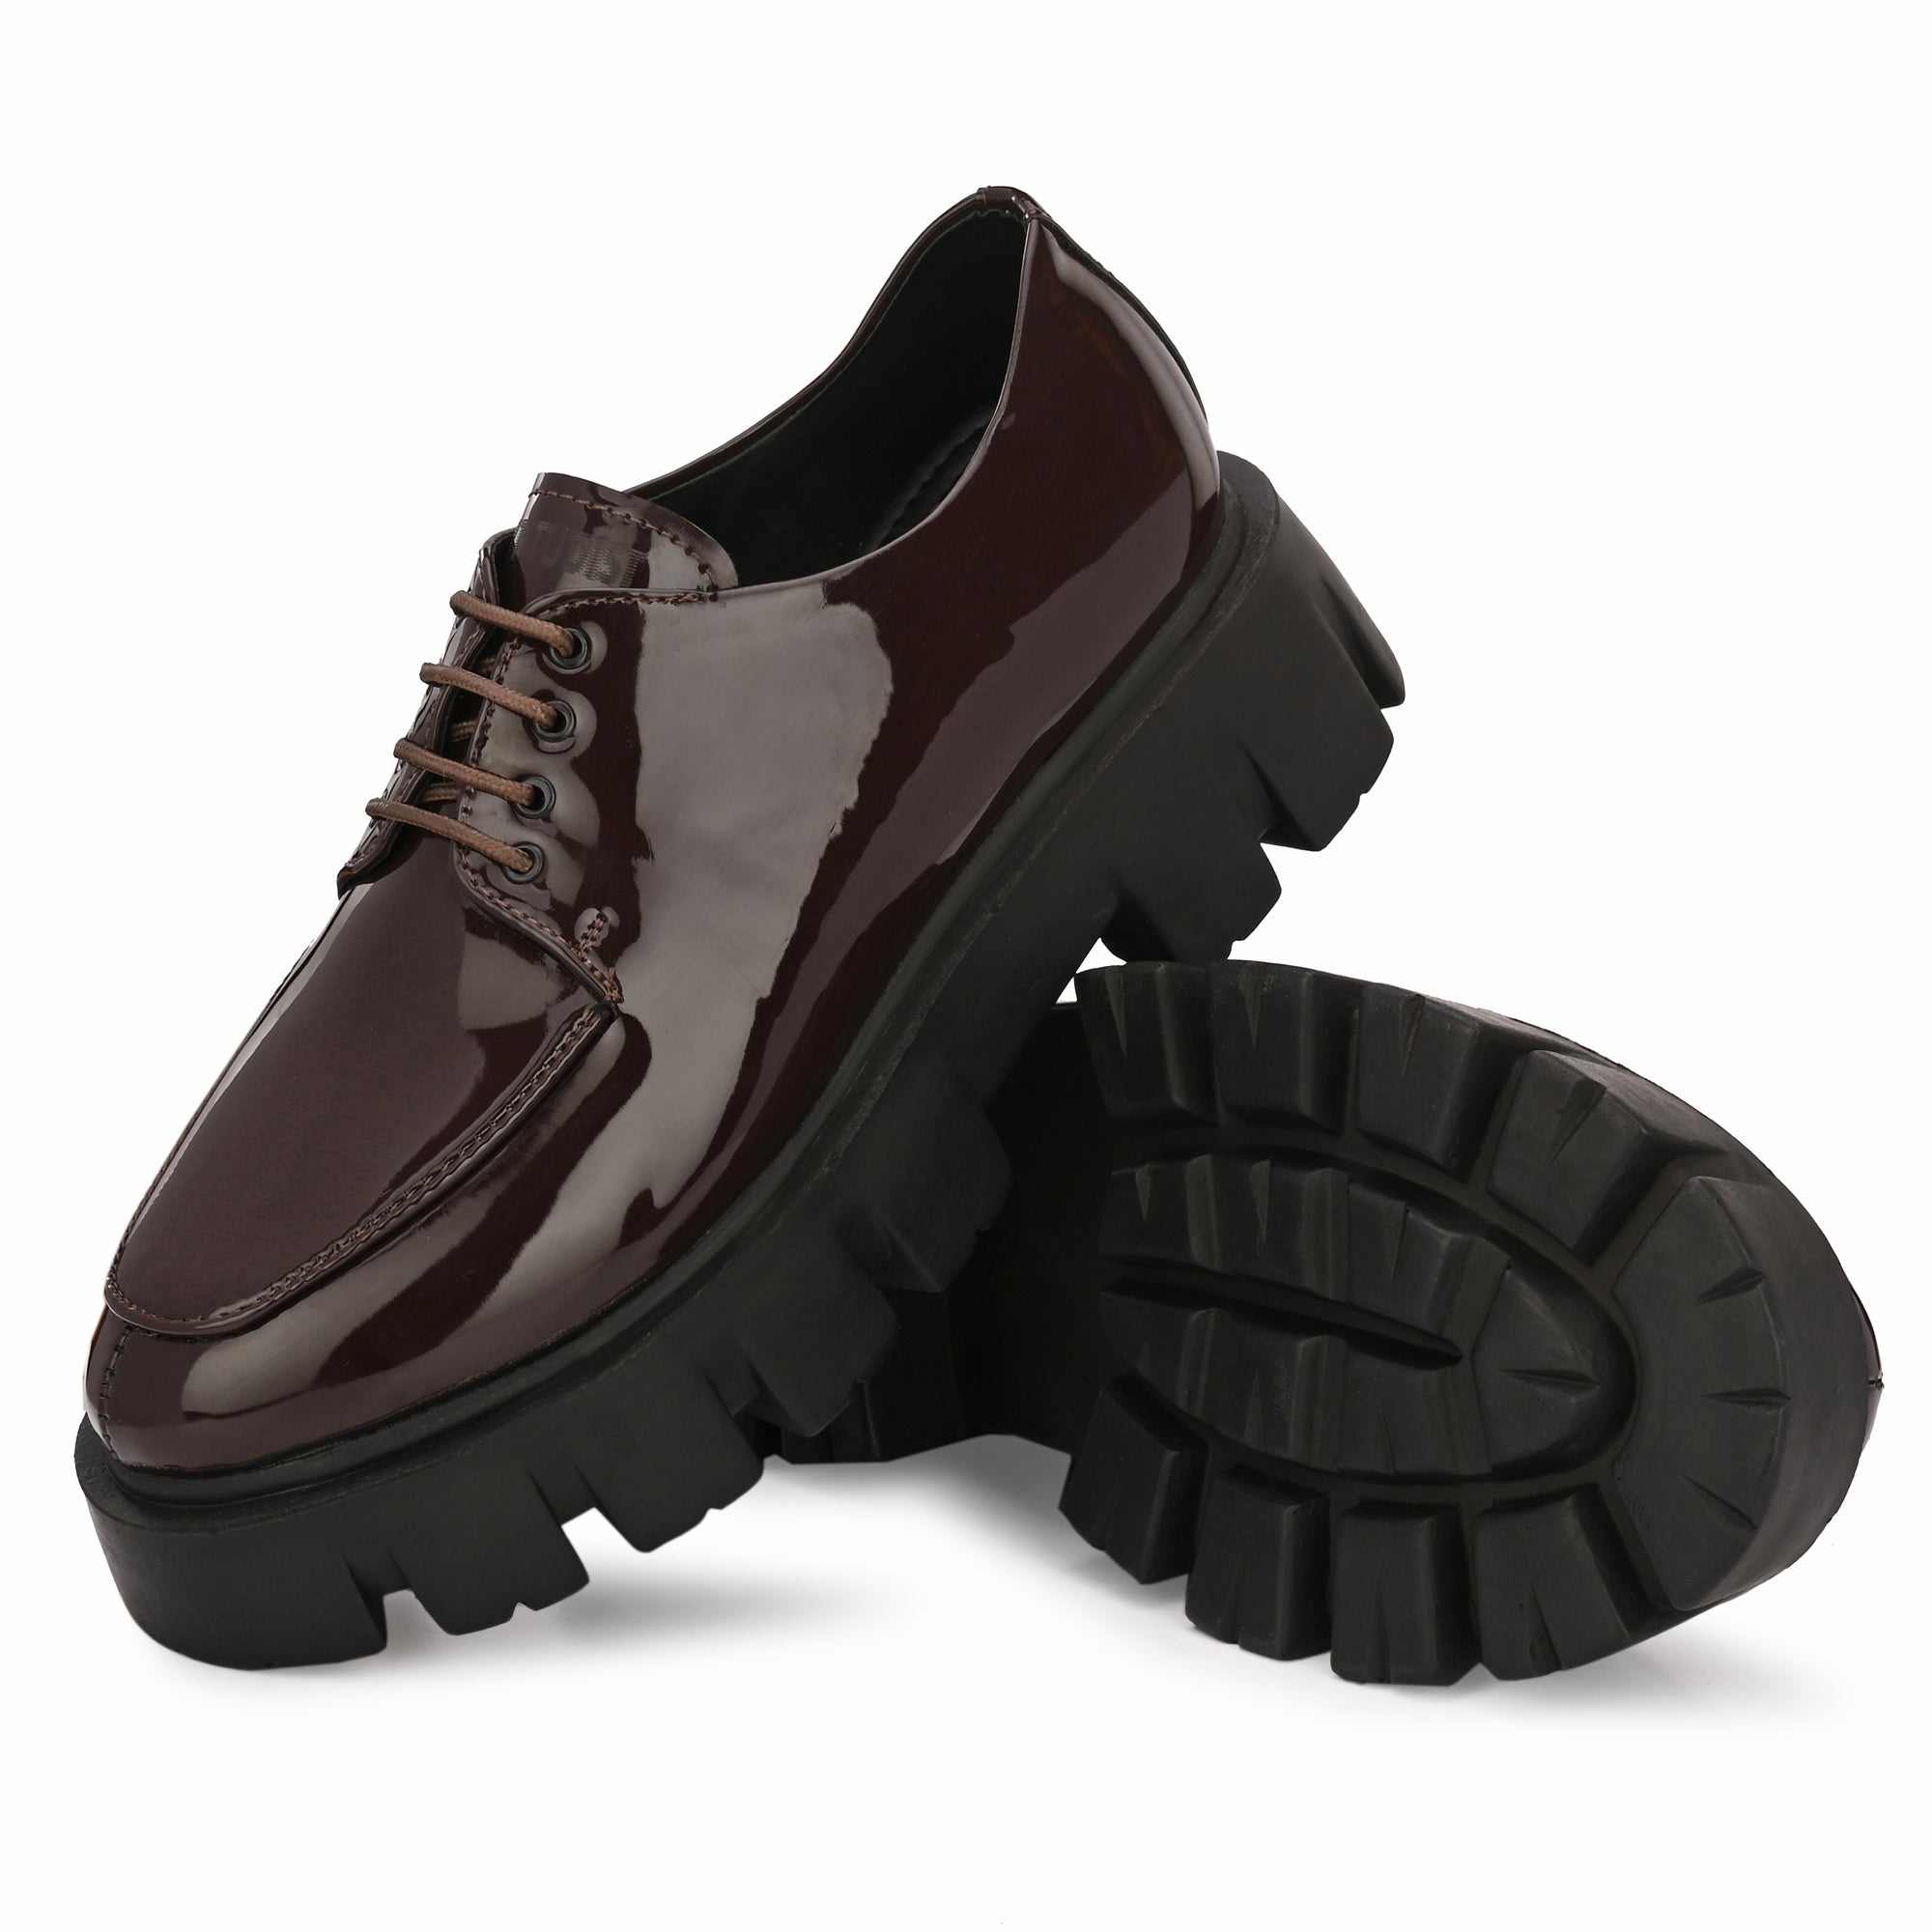 attitudist-glossy-coffee-brown-high-heel-derby-shoes-for-men